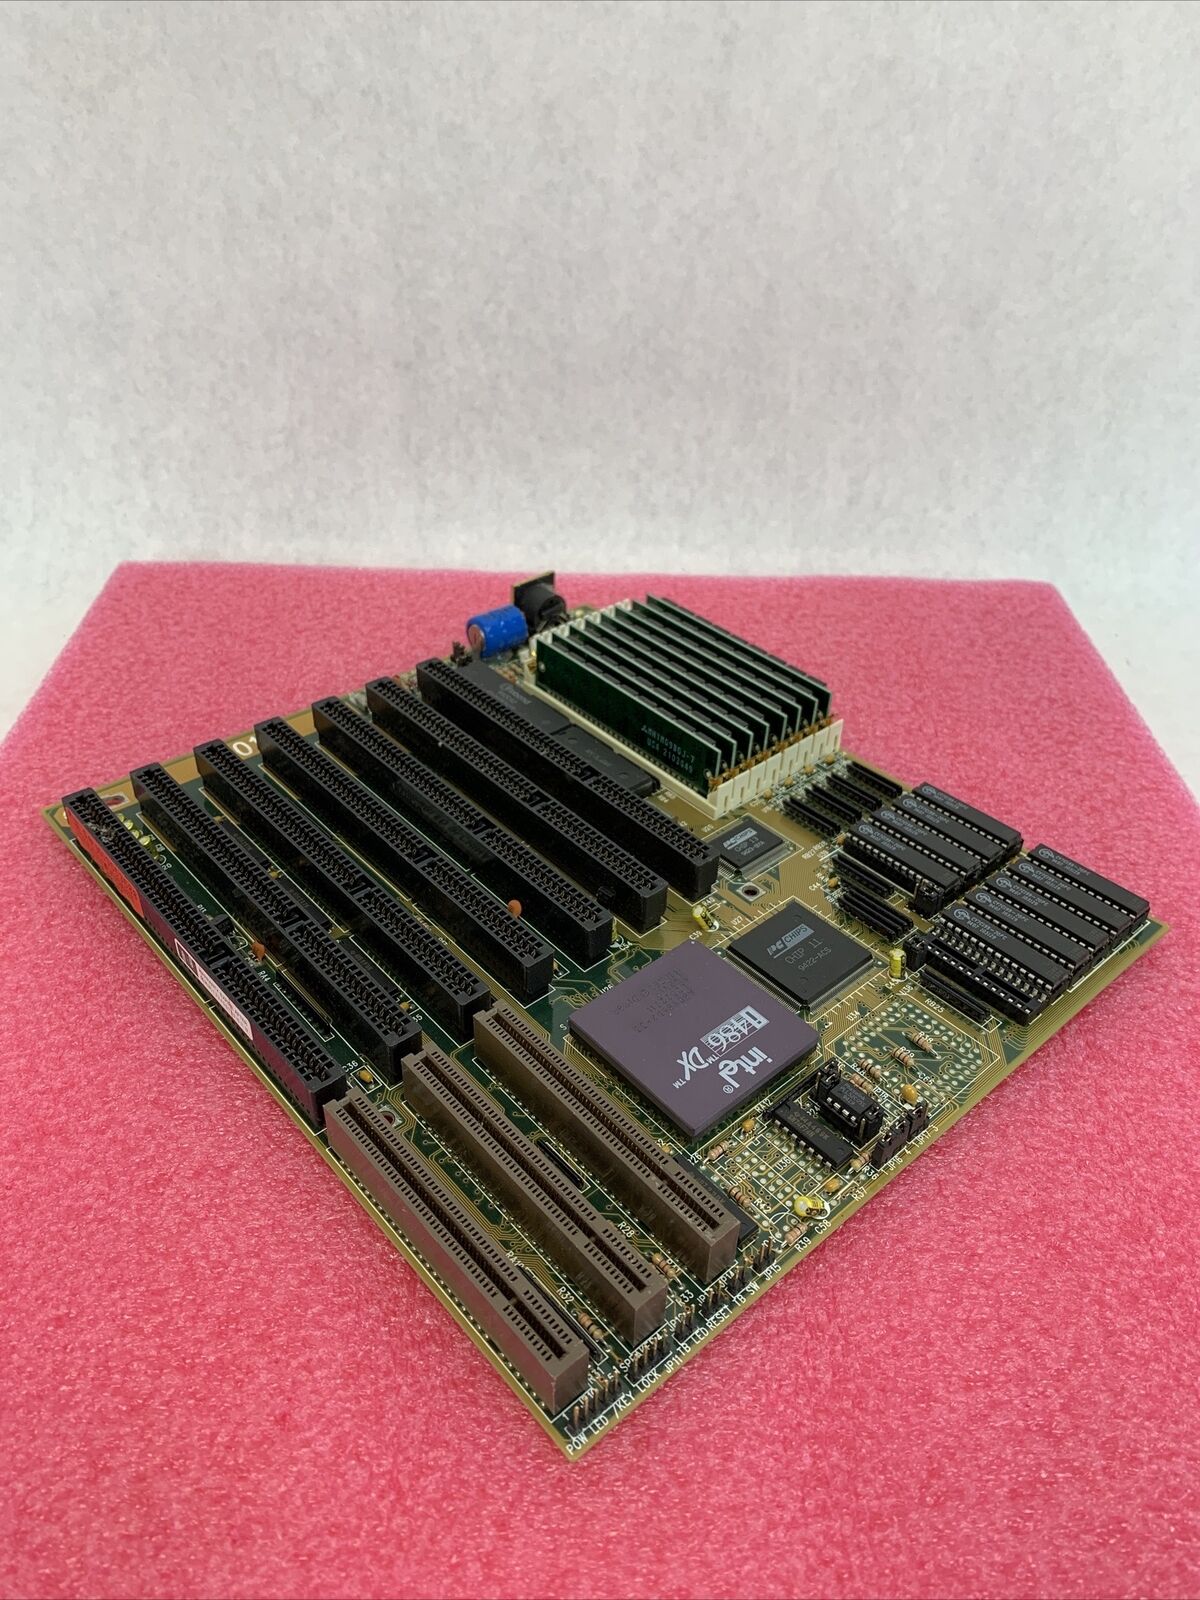 PC Chips M601 v1.3F Motherboard Intel 80486DX 33MHz 8MB RAM